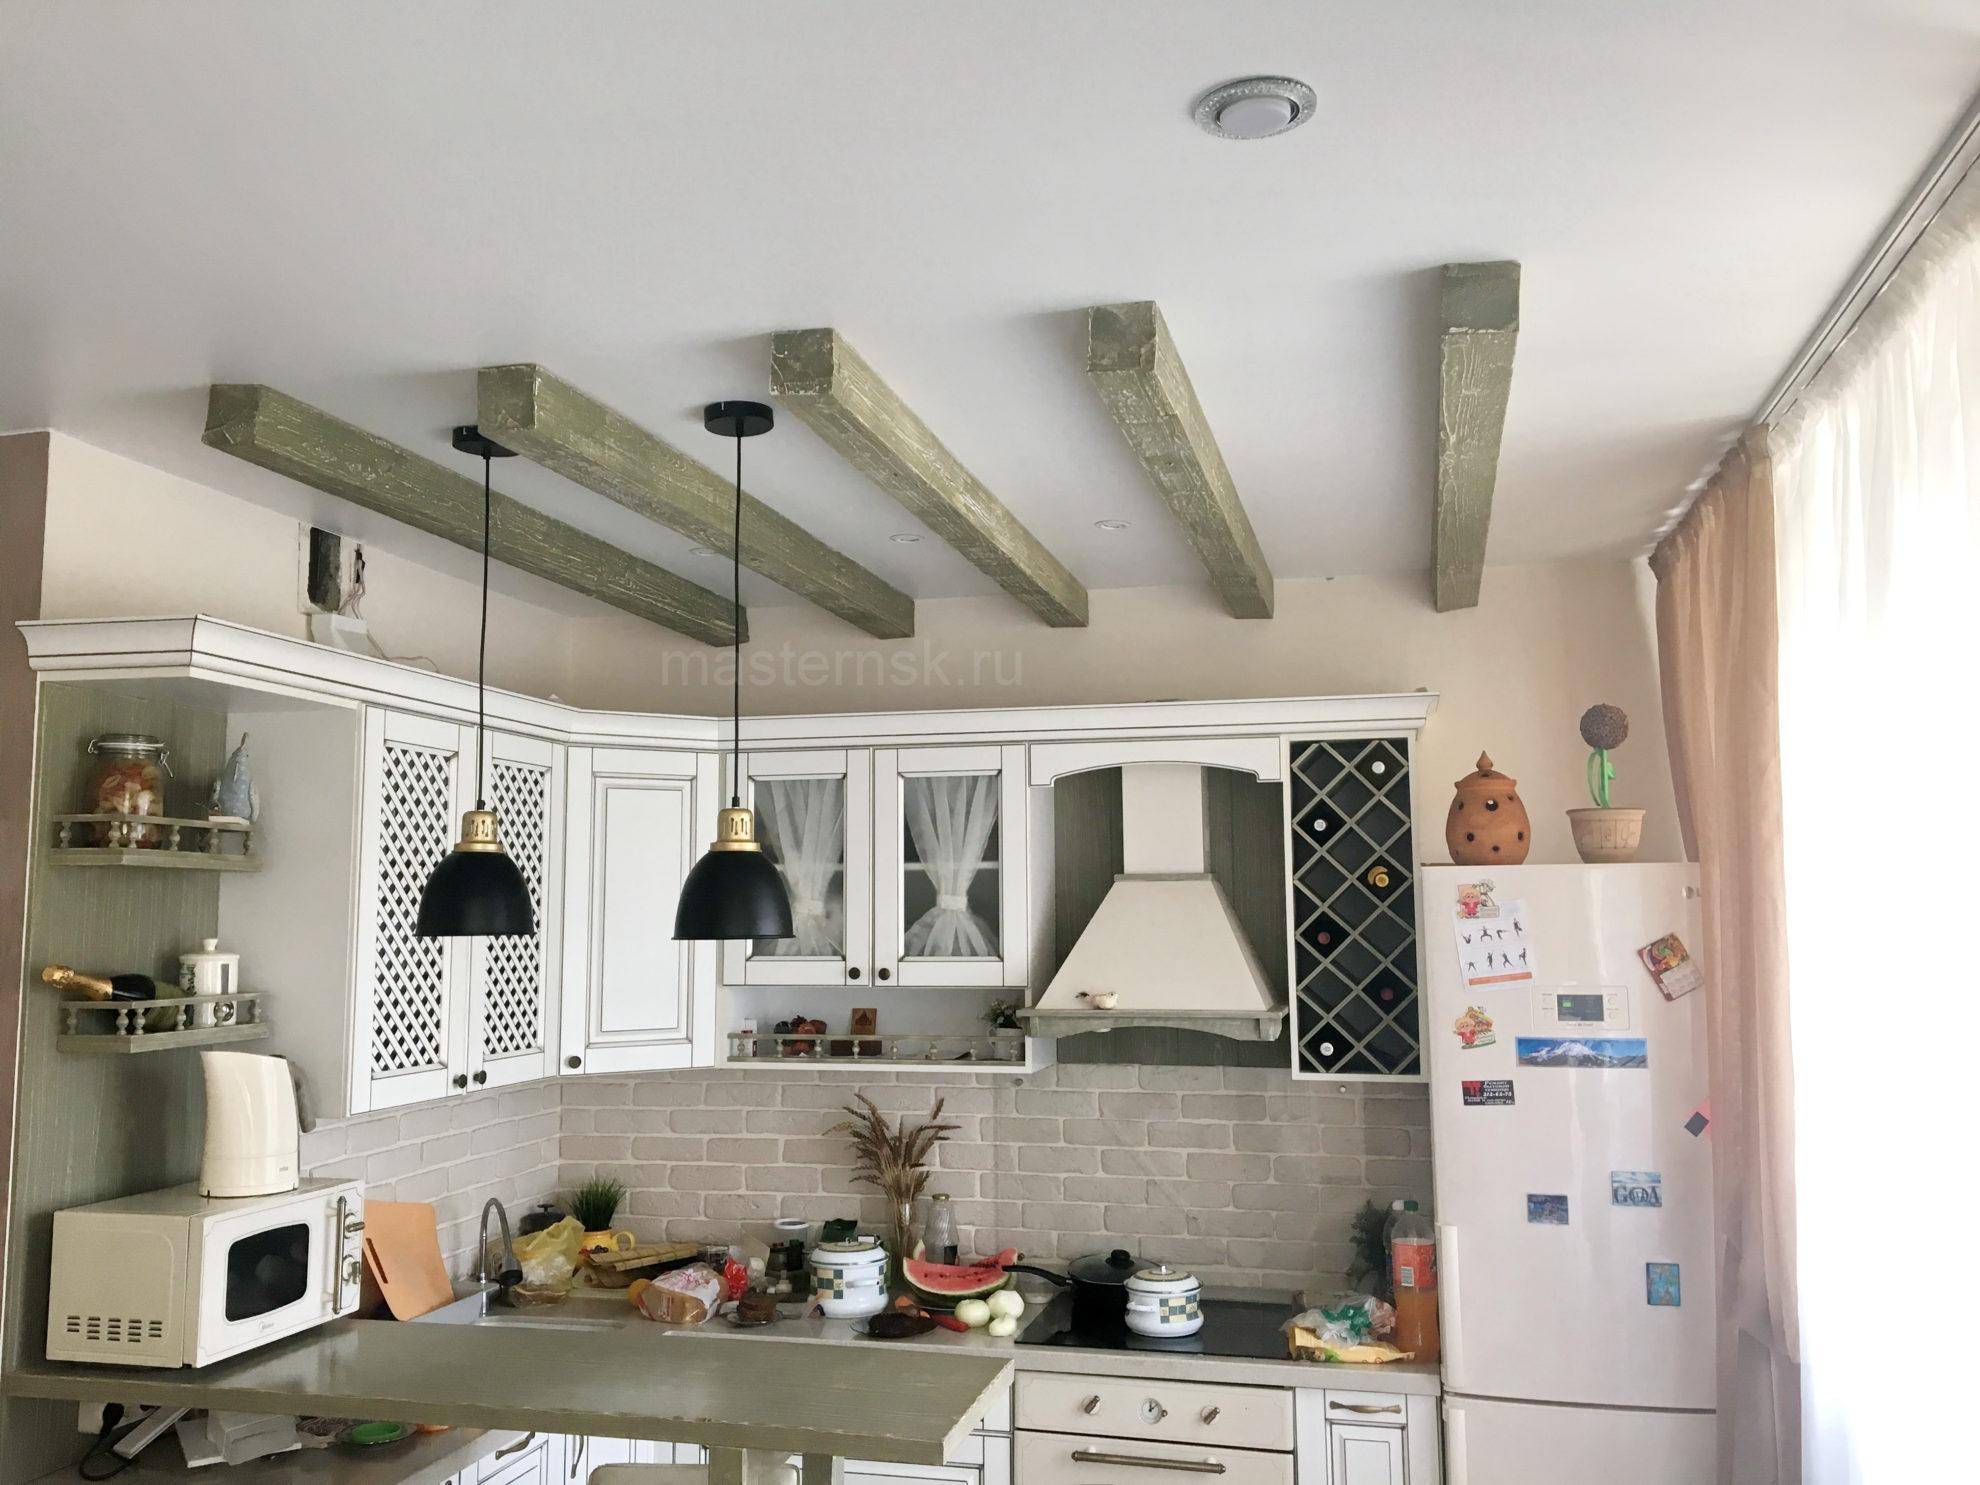 Ремонт потолка на кухне своим руками варианты (11 фото)